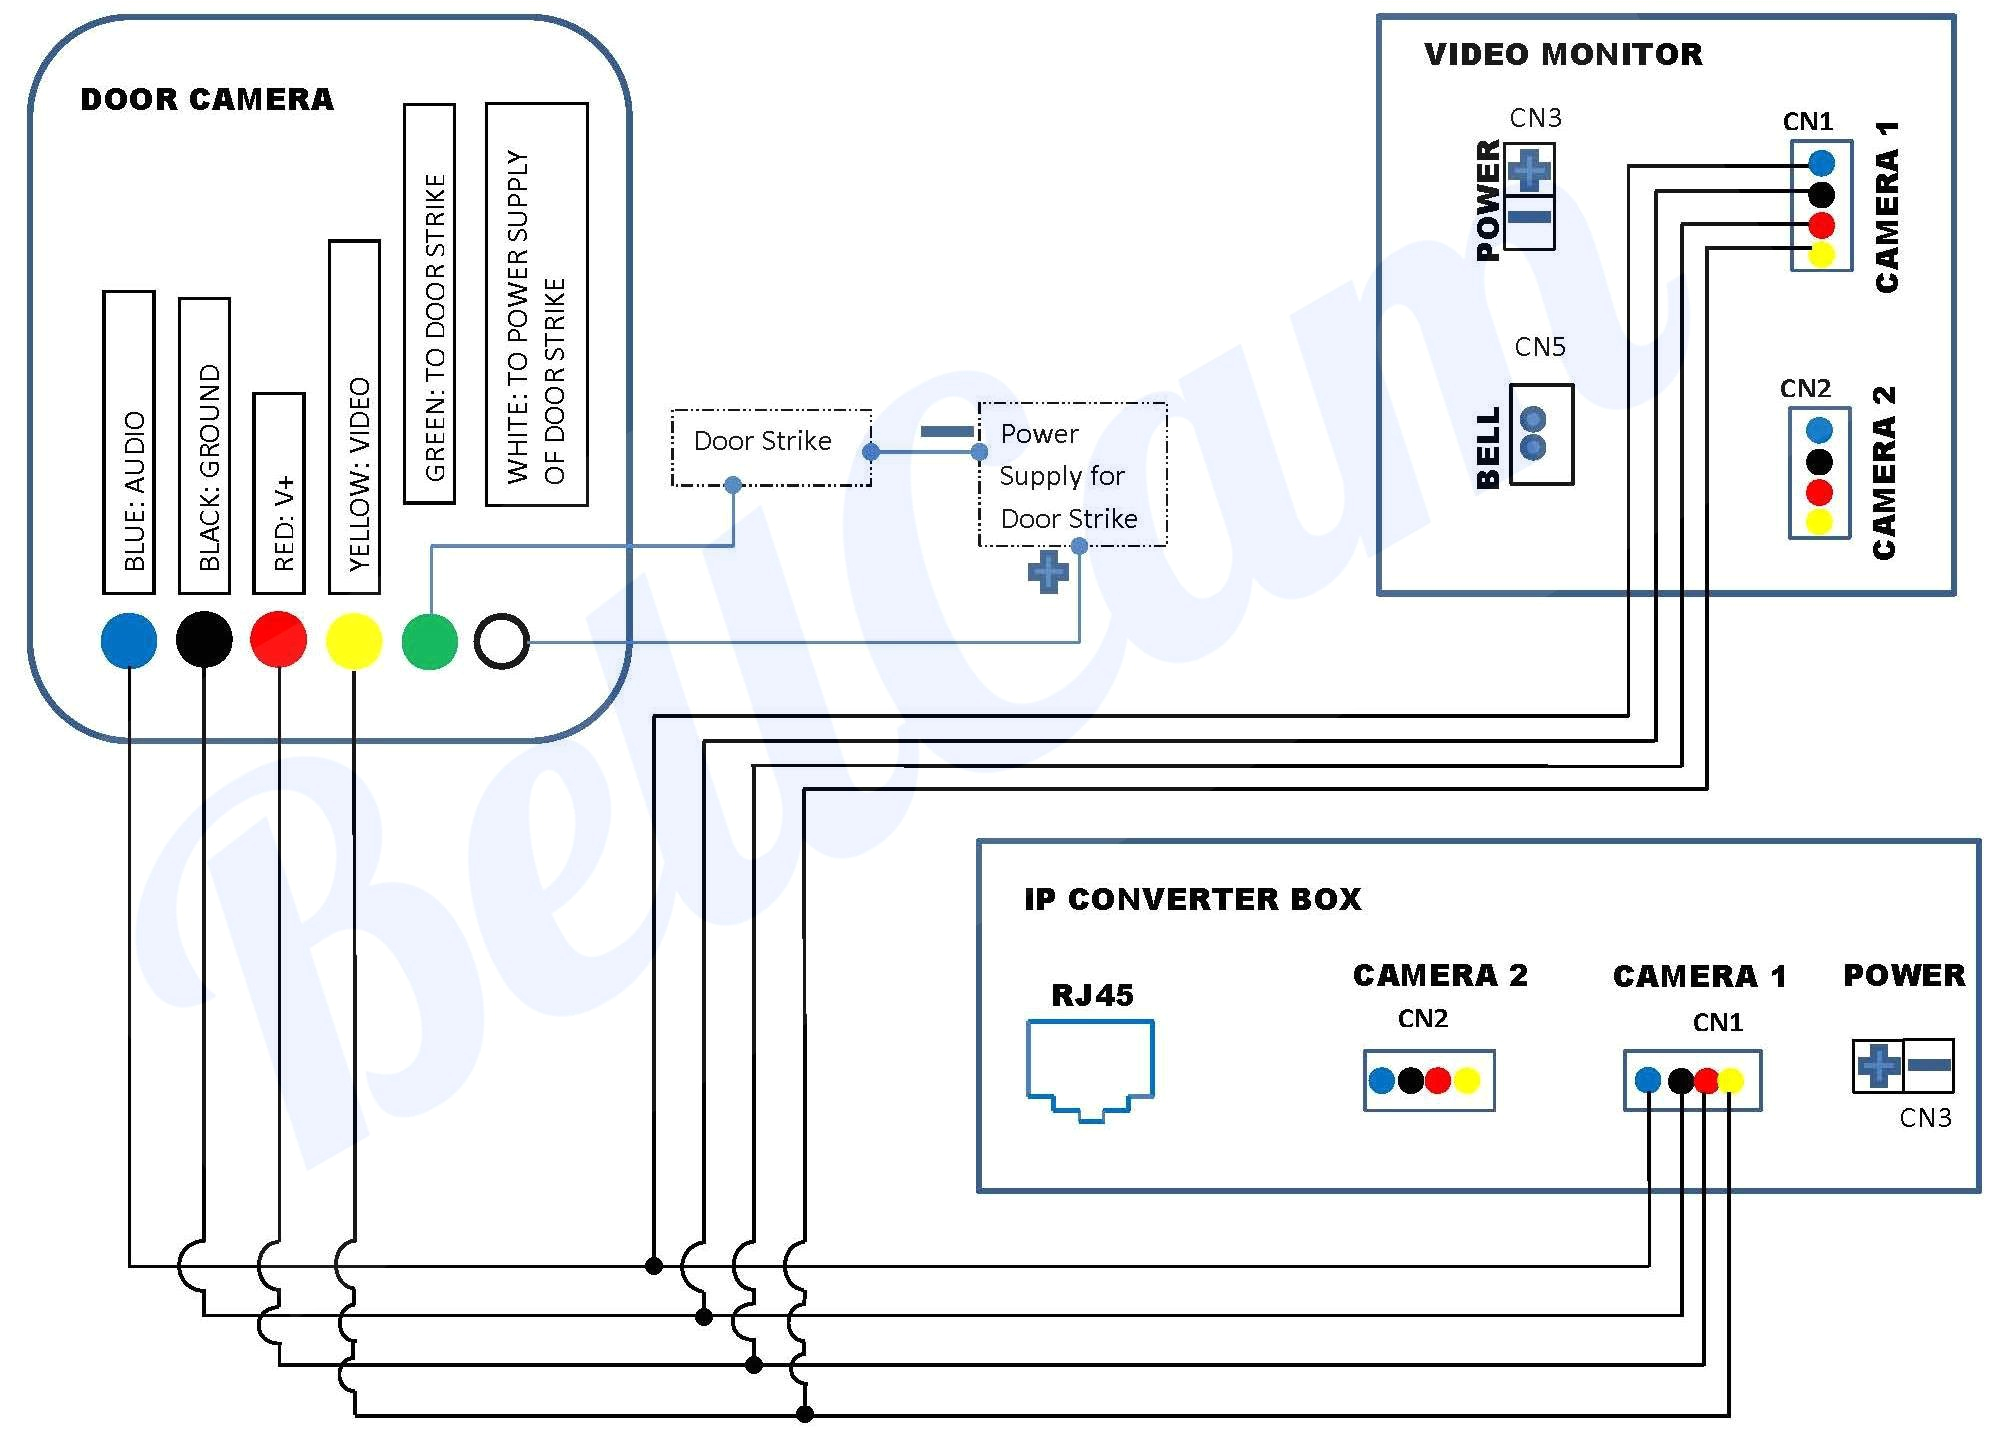 x10 video cam wiring diagram wiring diagram blog208c wiring diagram cam wiring diagram ebook x10 video